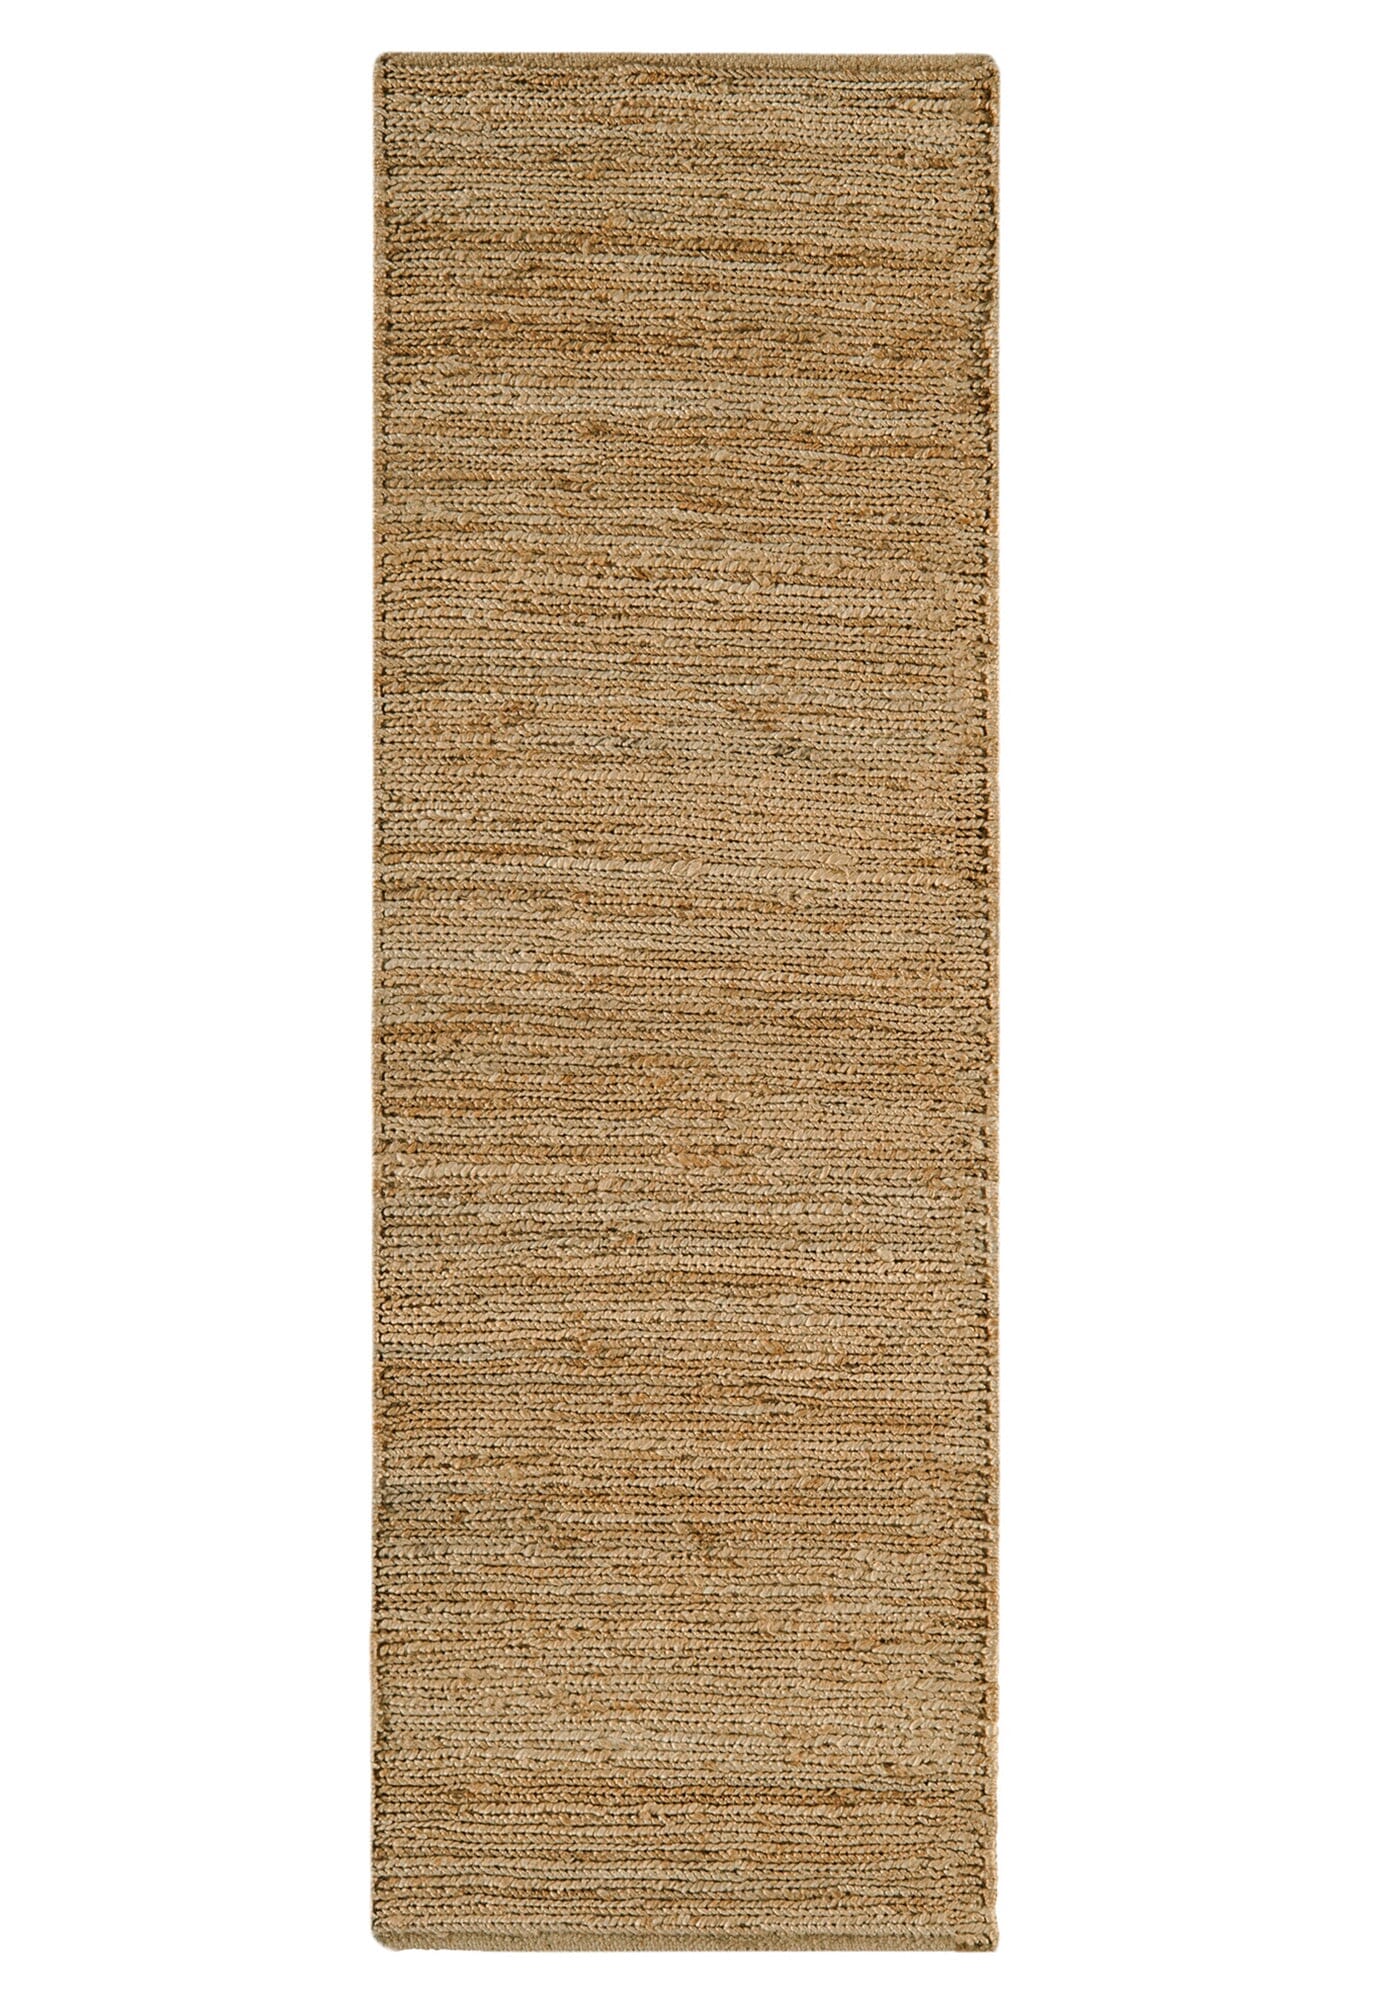  Asiatic Carpets-Asiatic Carpets Soumak Hand Woven Runner Natural - 66 x 200cm-Beige, Natural 821 